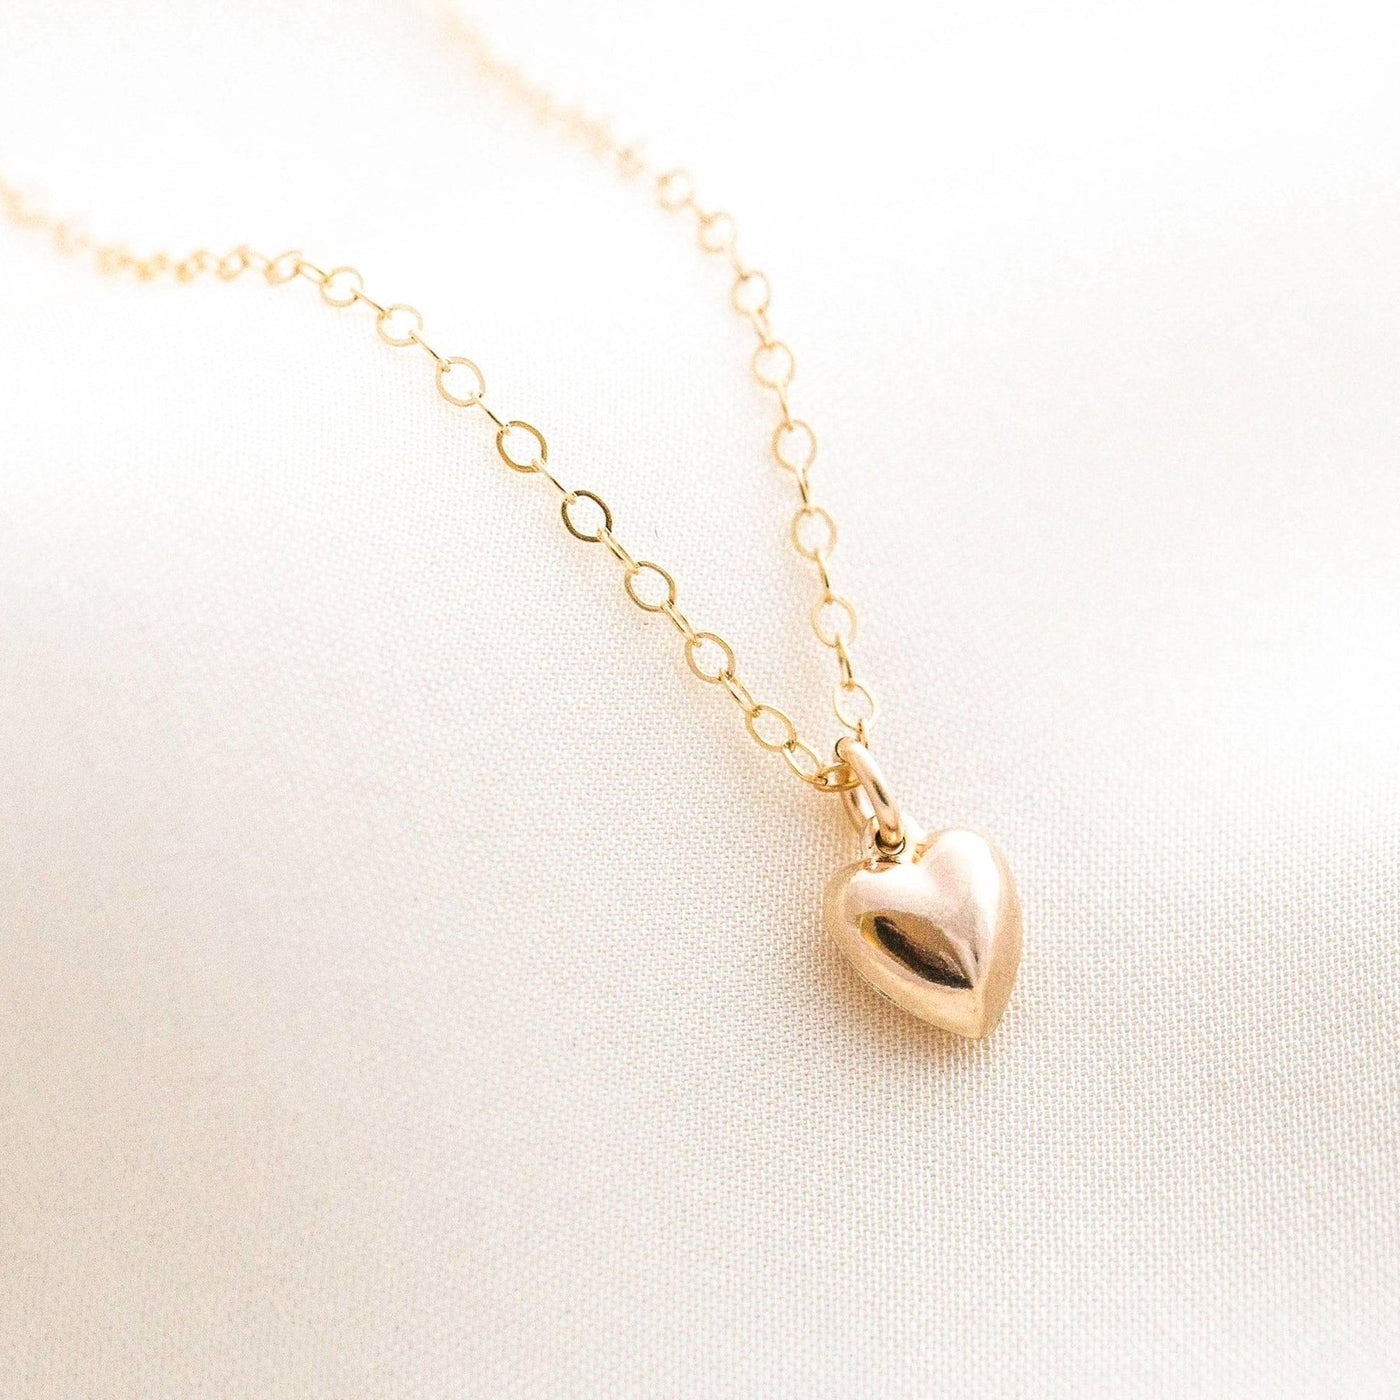 Tiny Heart Necklace | Simple & Dainty Jewelry